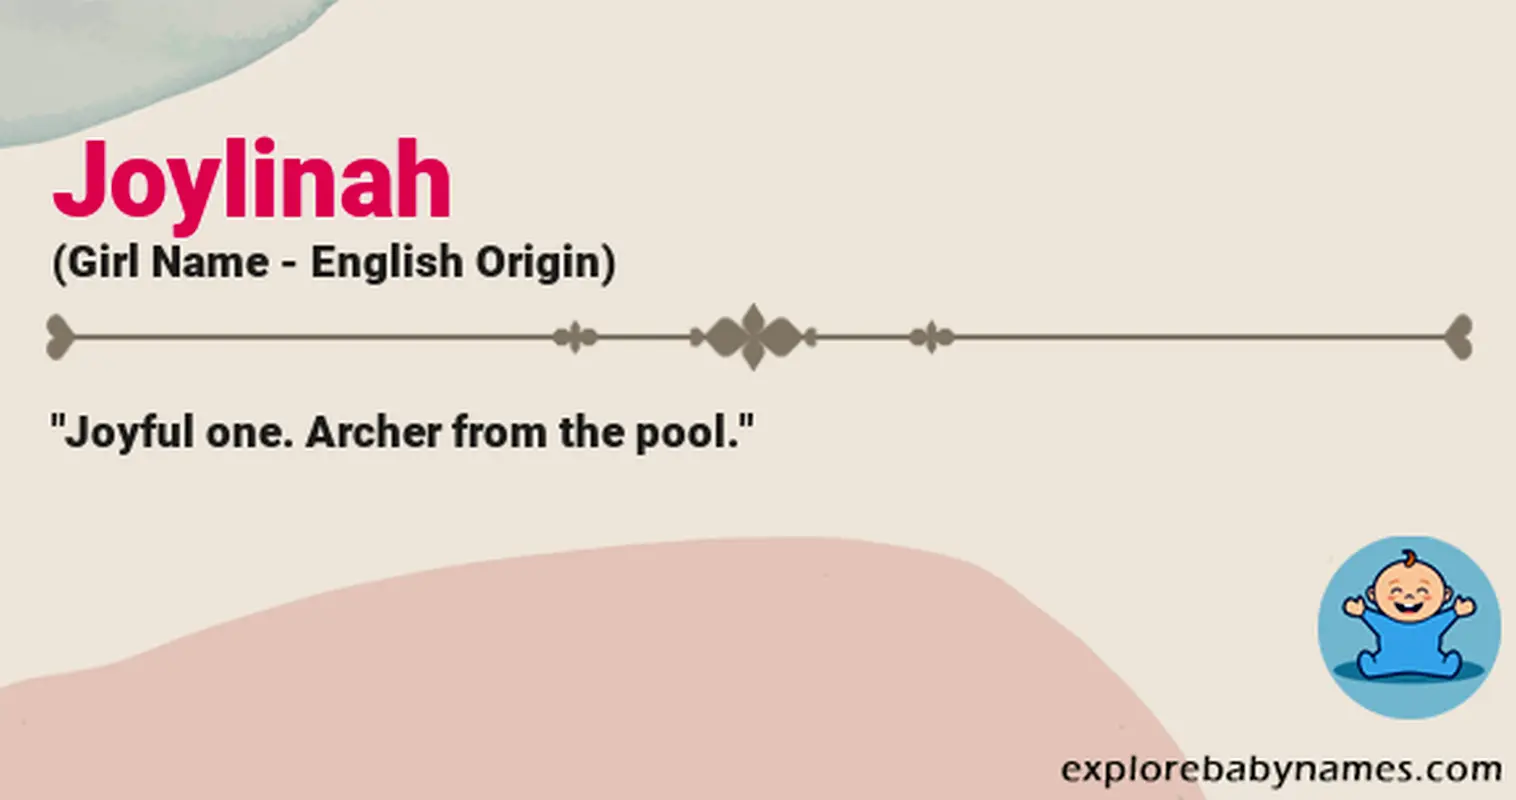 Meaning of Joylinah